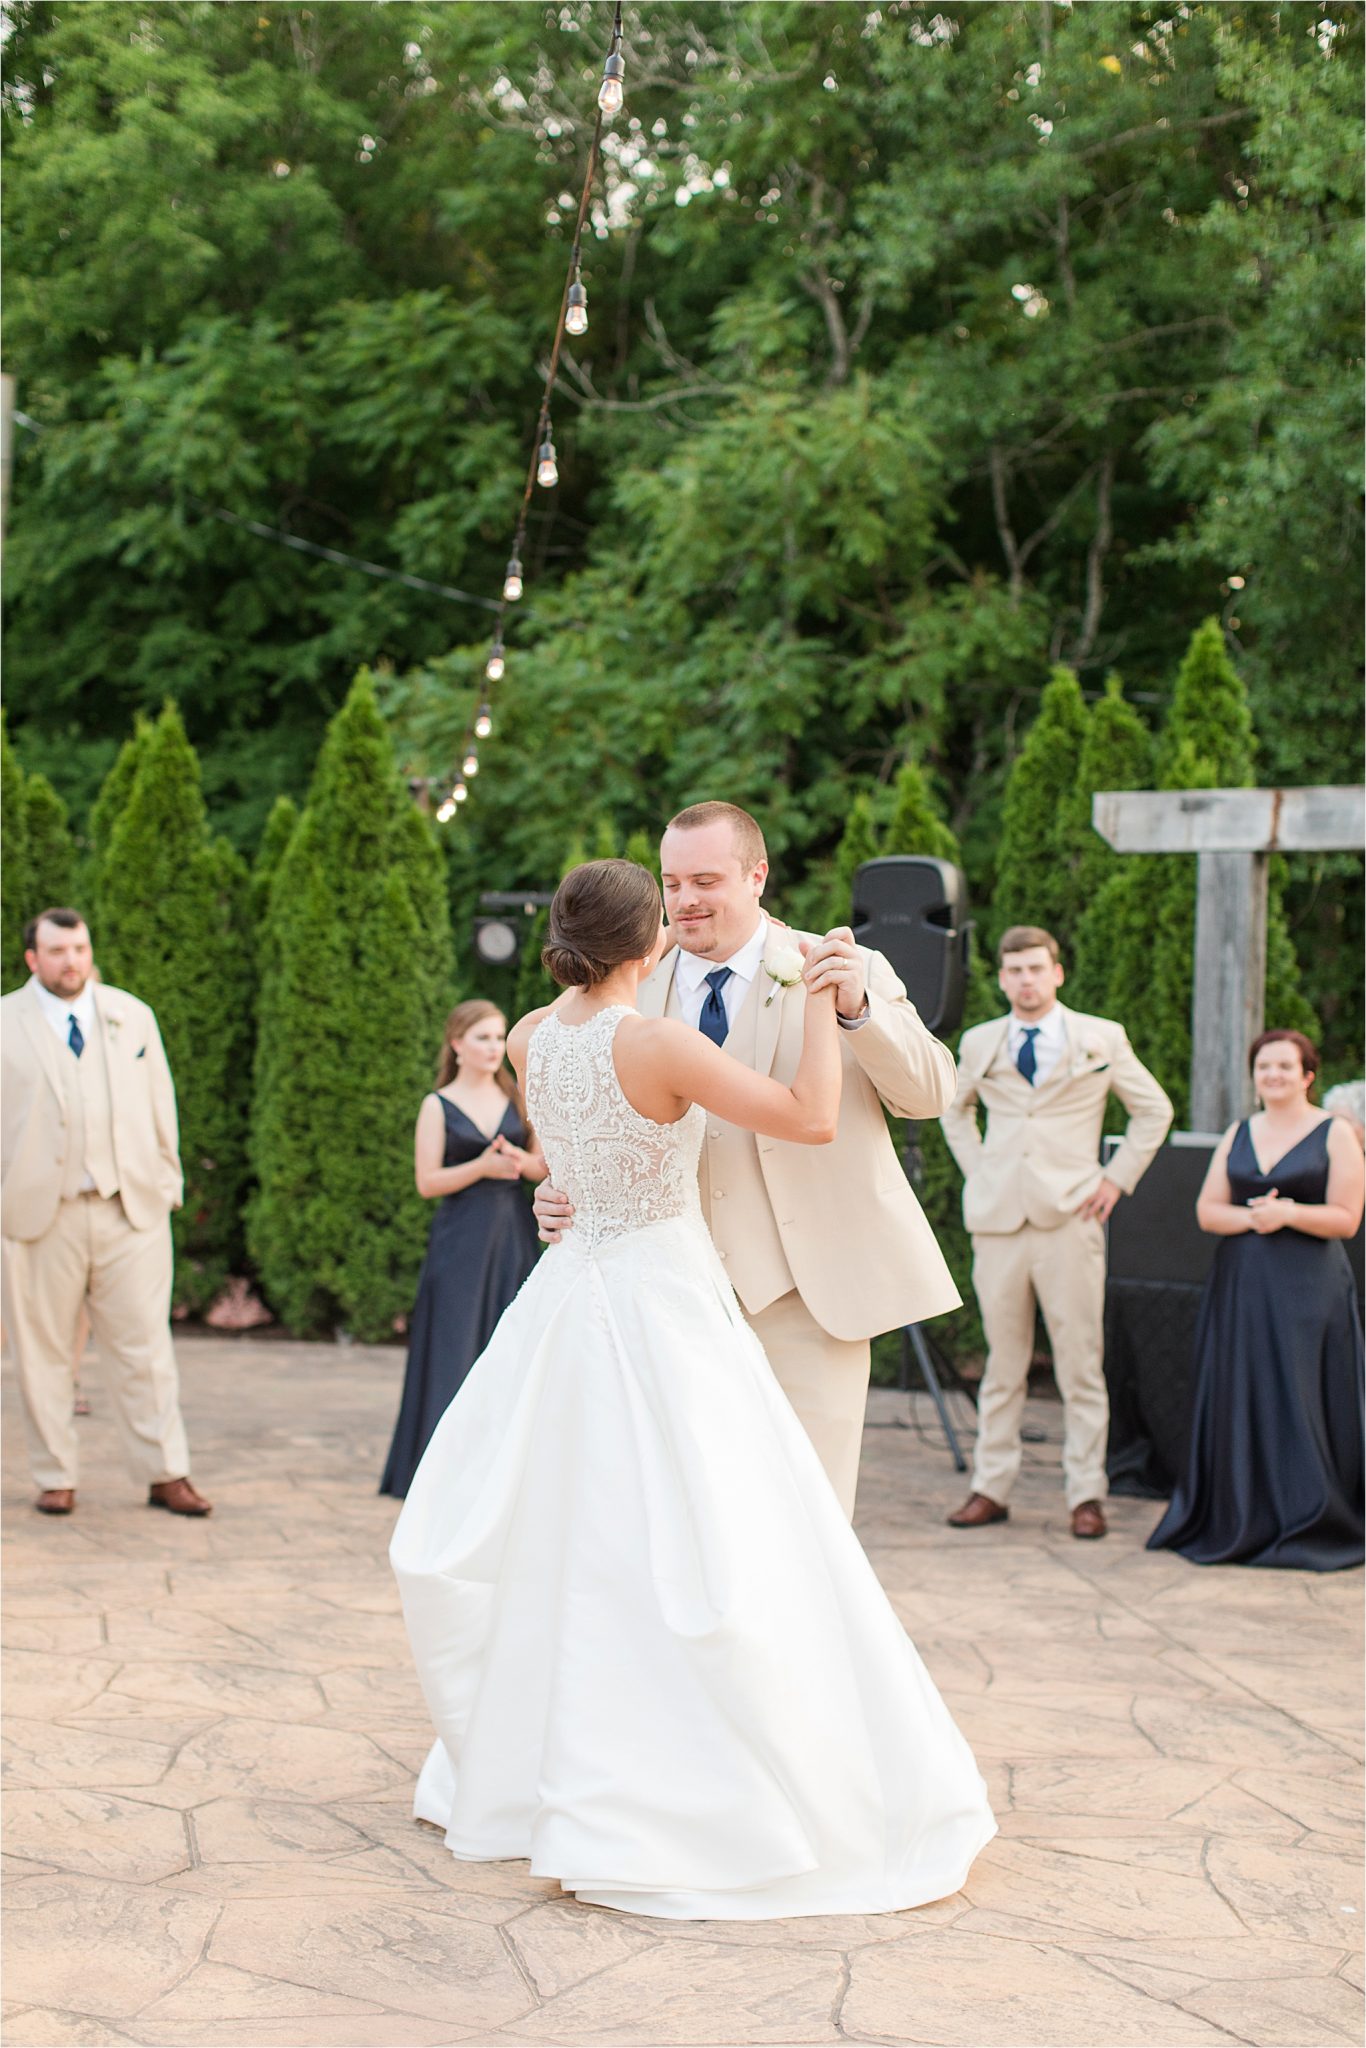 Sonnet House, Birmingham Alabama Wedding Photographer, Wedding dance, Wedding reception